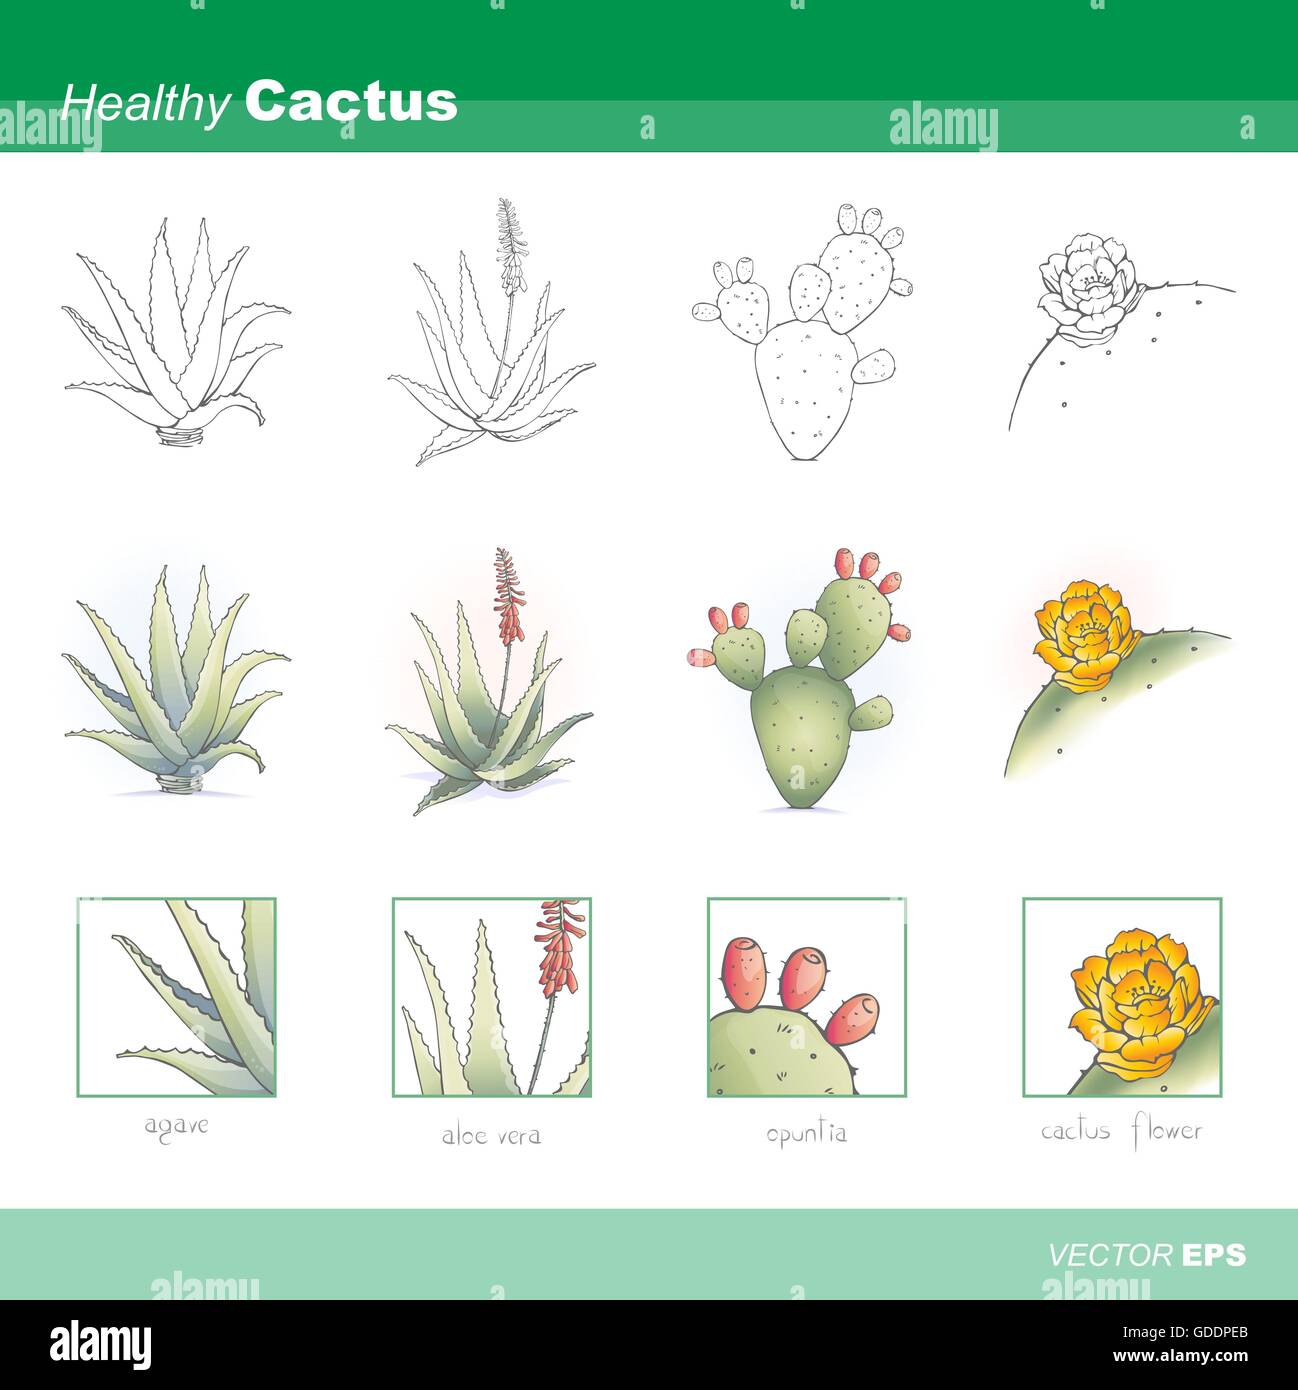 Healthy cactus plants set: aloe vera, agave, opuntia and cactus flower Stock Vector